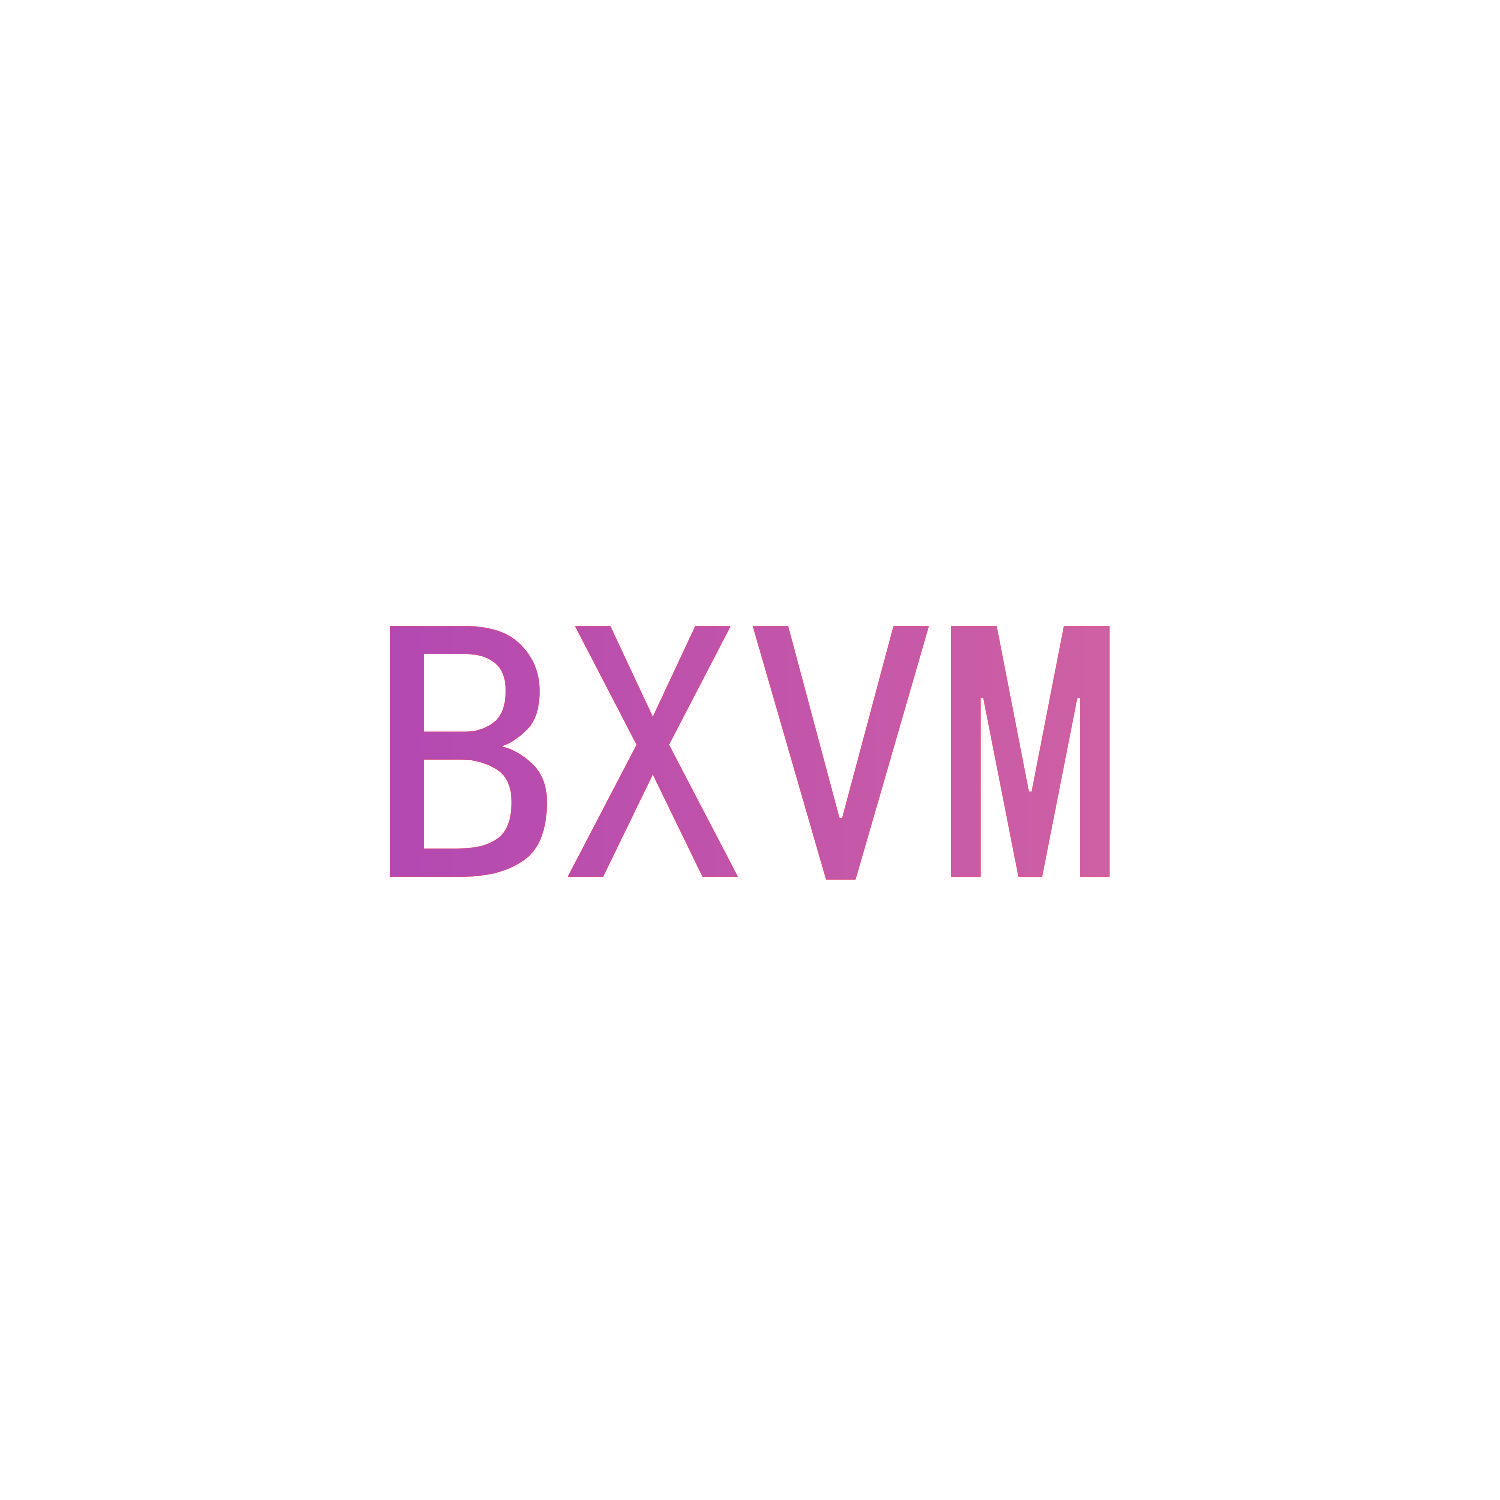 BXVM